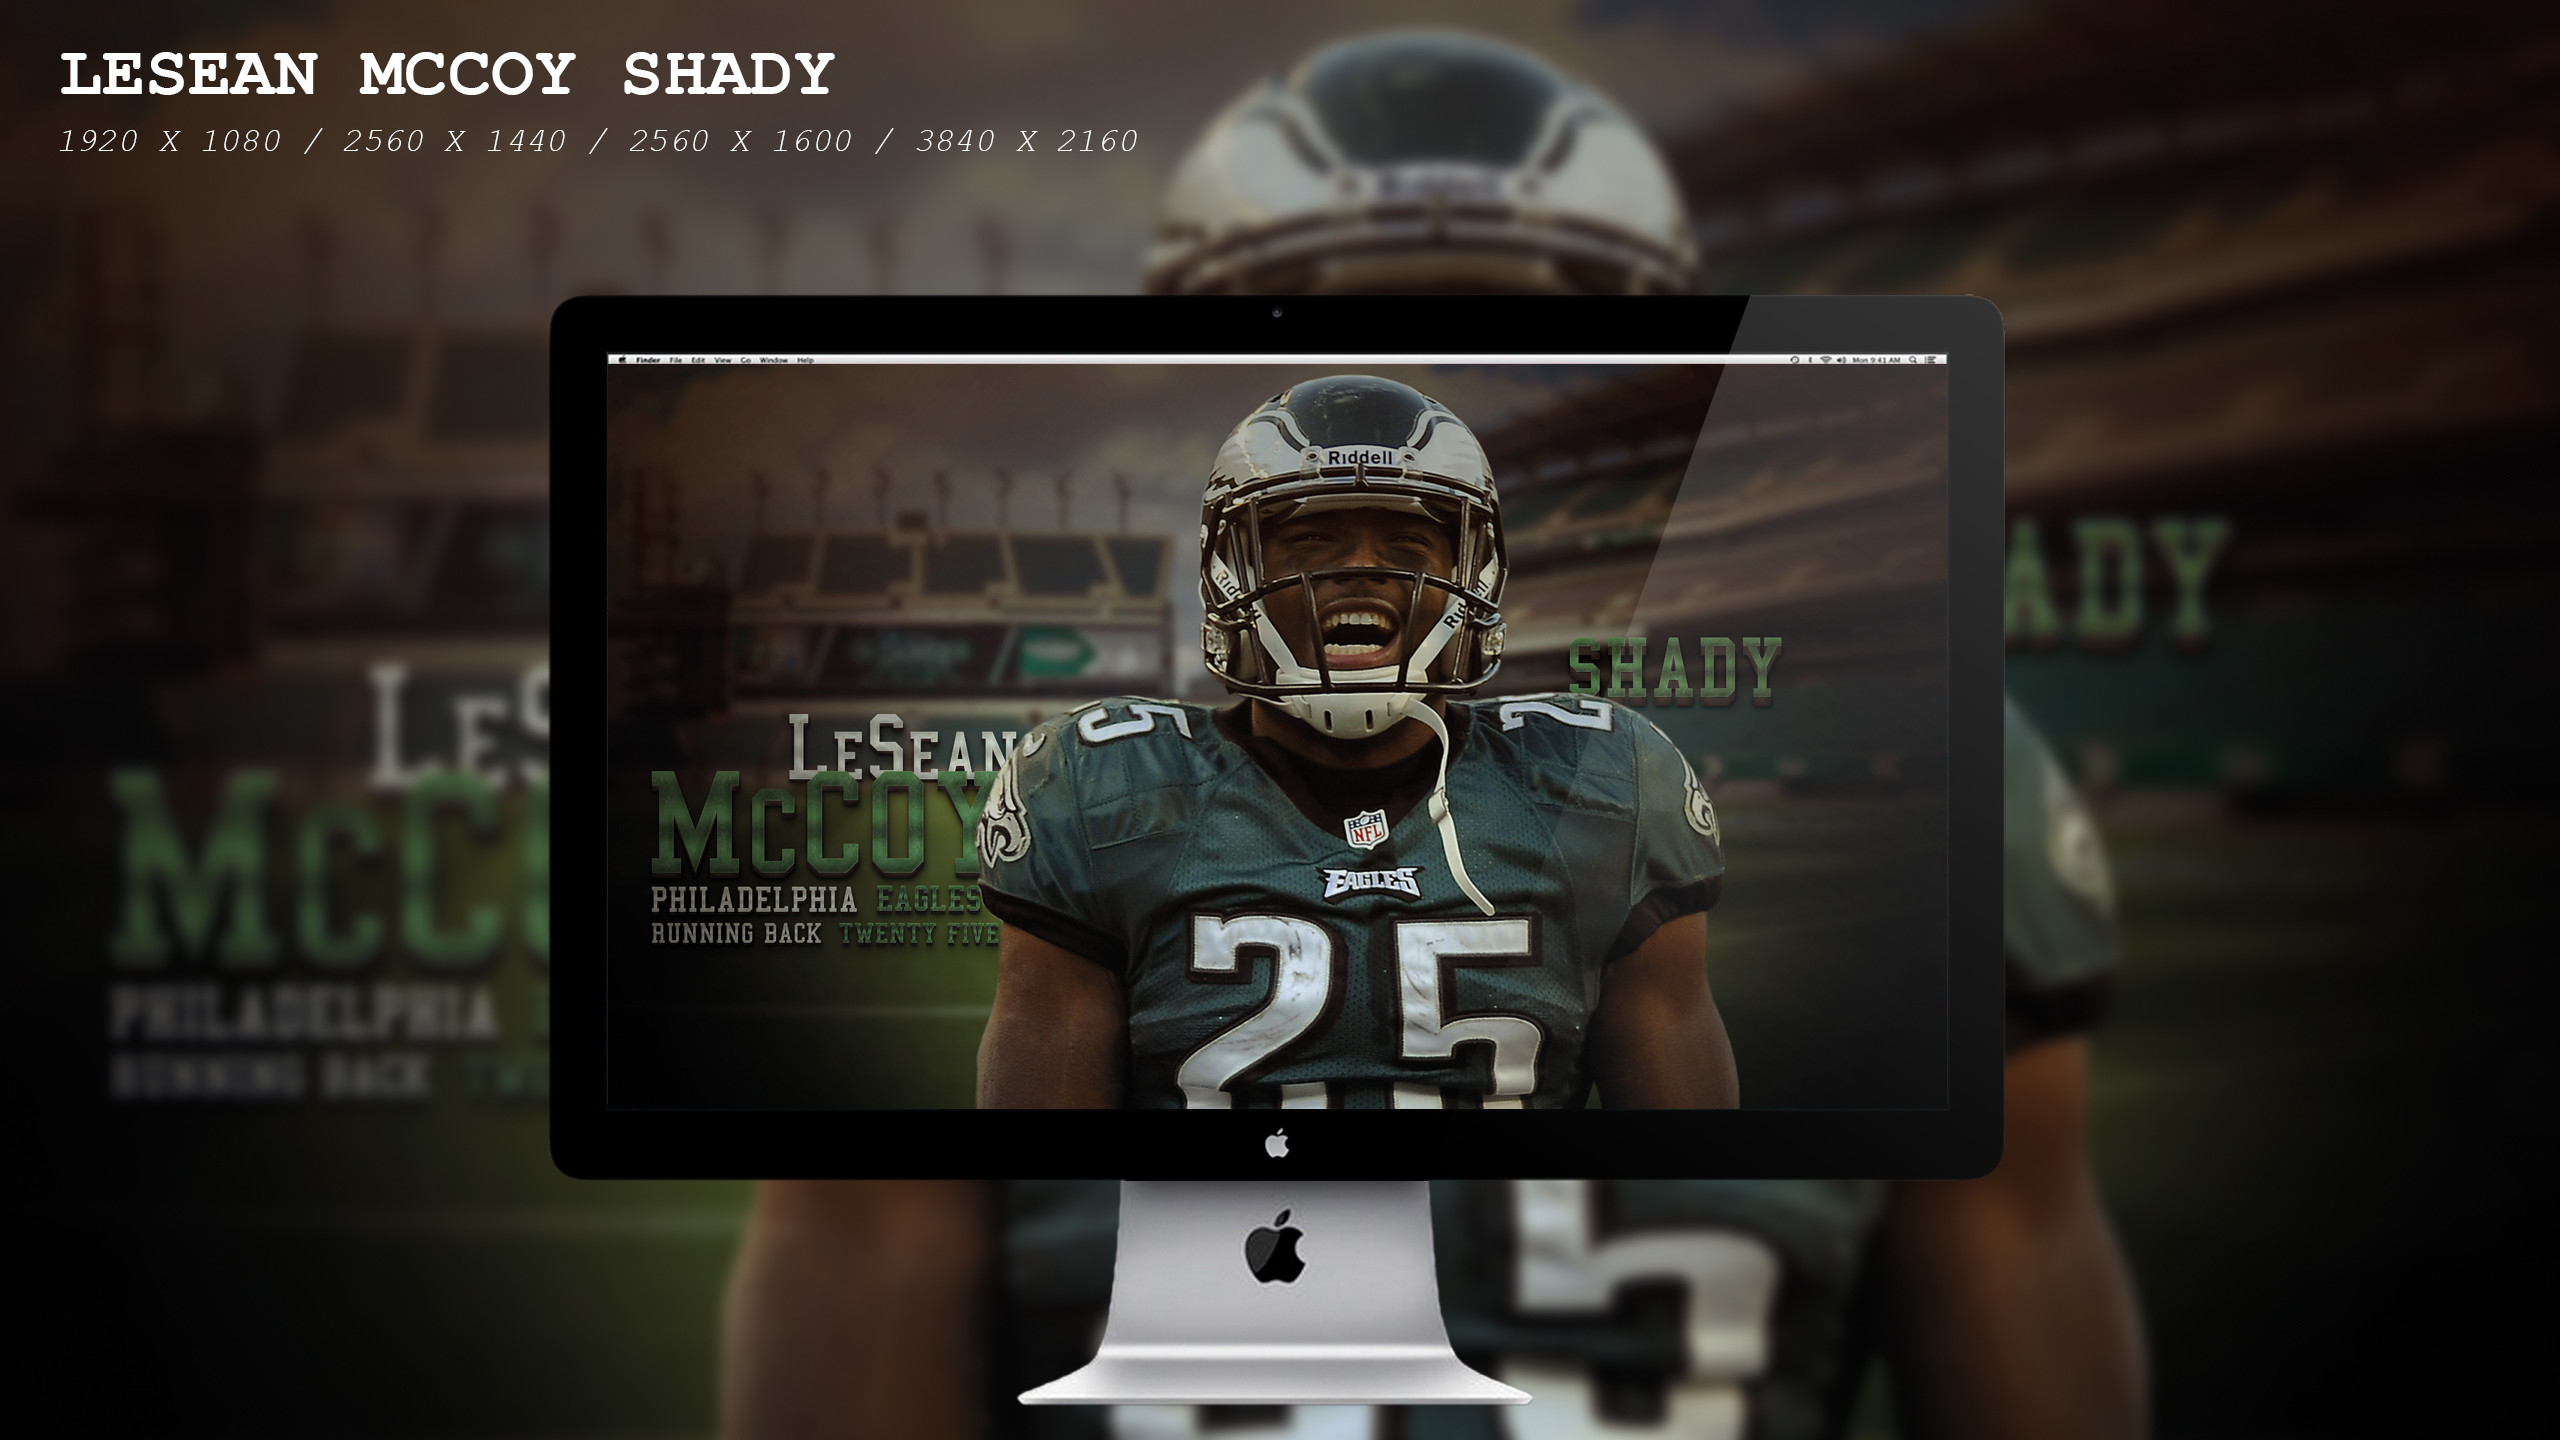 2560x1440 LeSean McCoy Shady Wallpaper HD by BeAware8 on DeviantArt